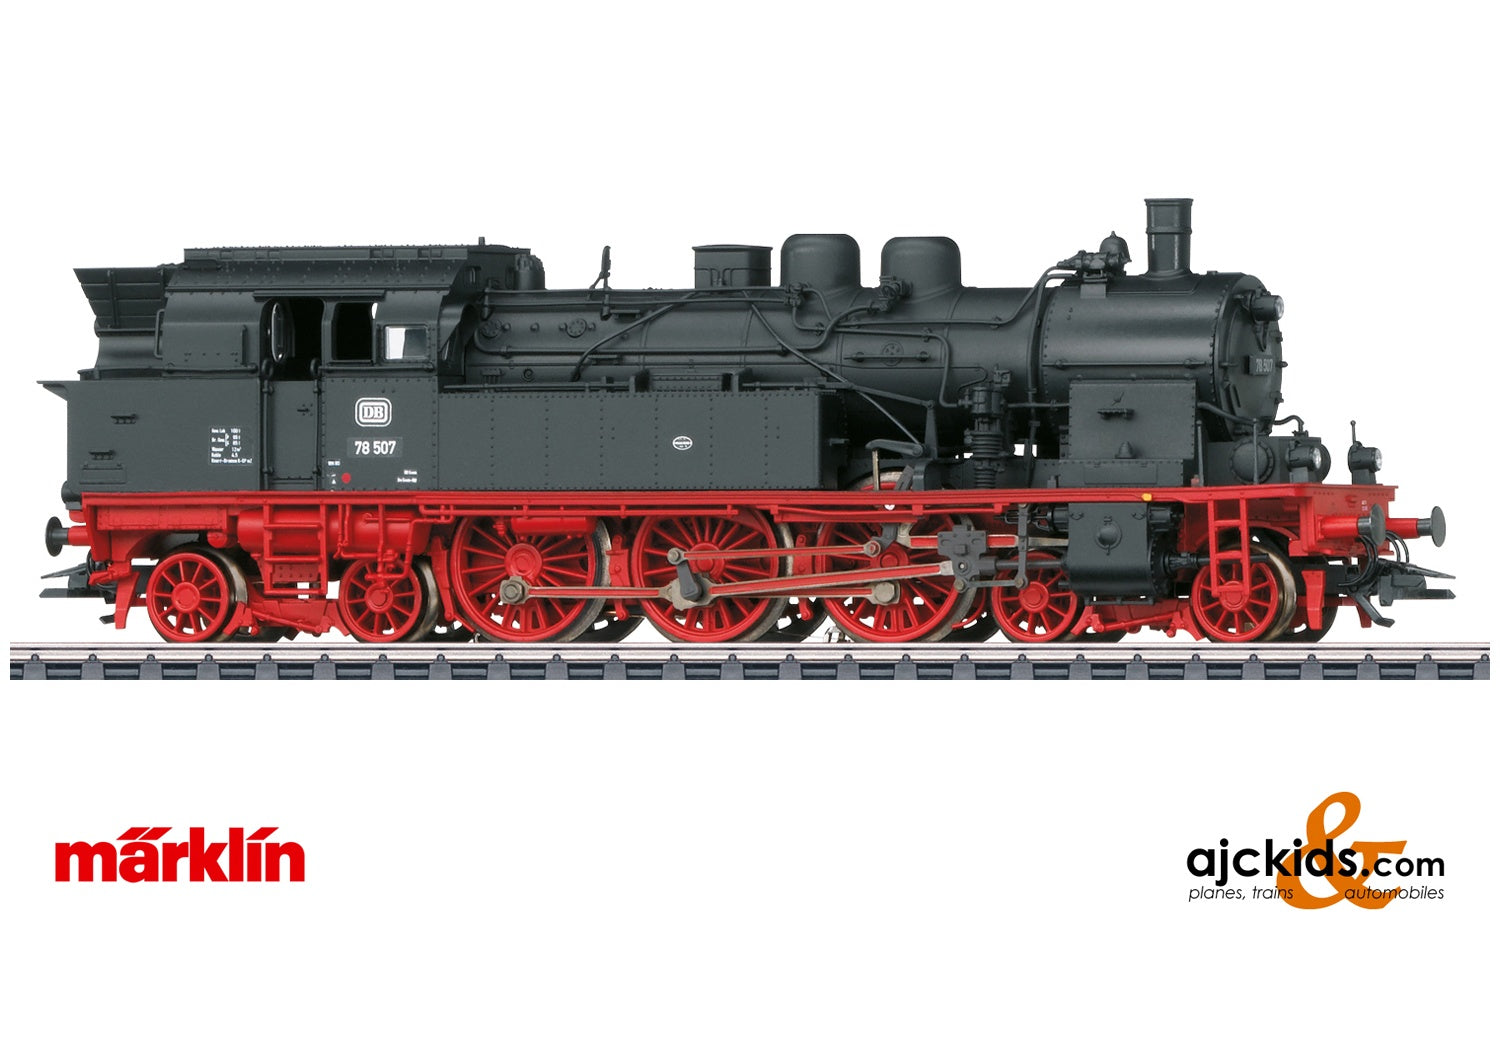 Marklin 39787 - Class 78 Steam Locomotive at Ajckids.com